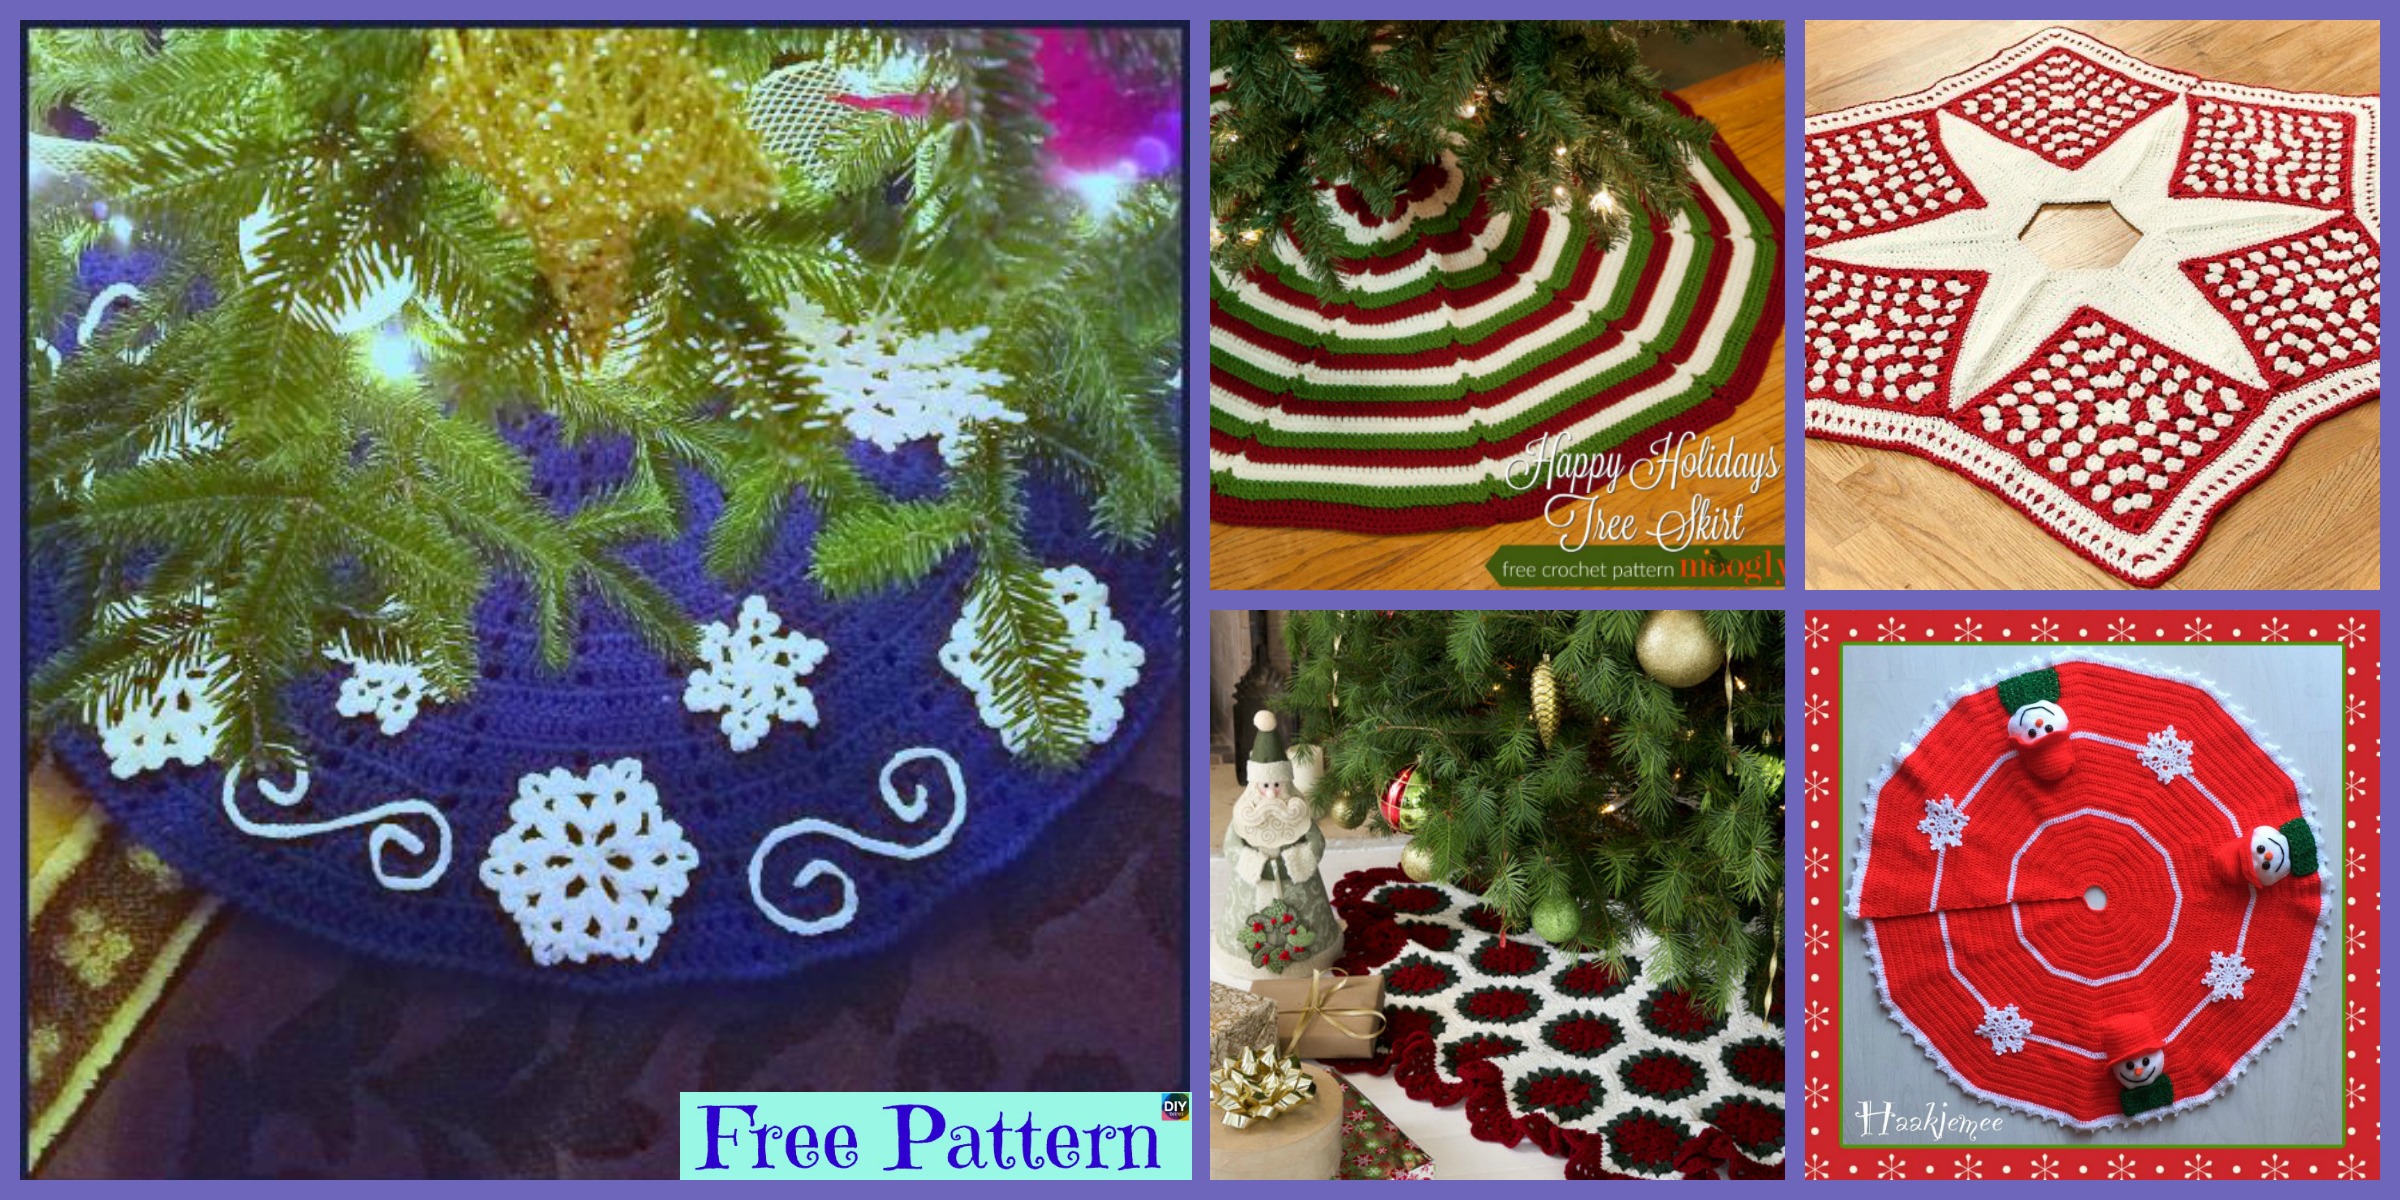 diy4ever-10 Crocheted Christmas Tree Skirt Free Patterns